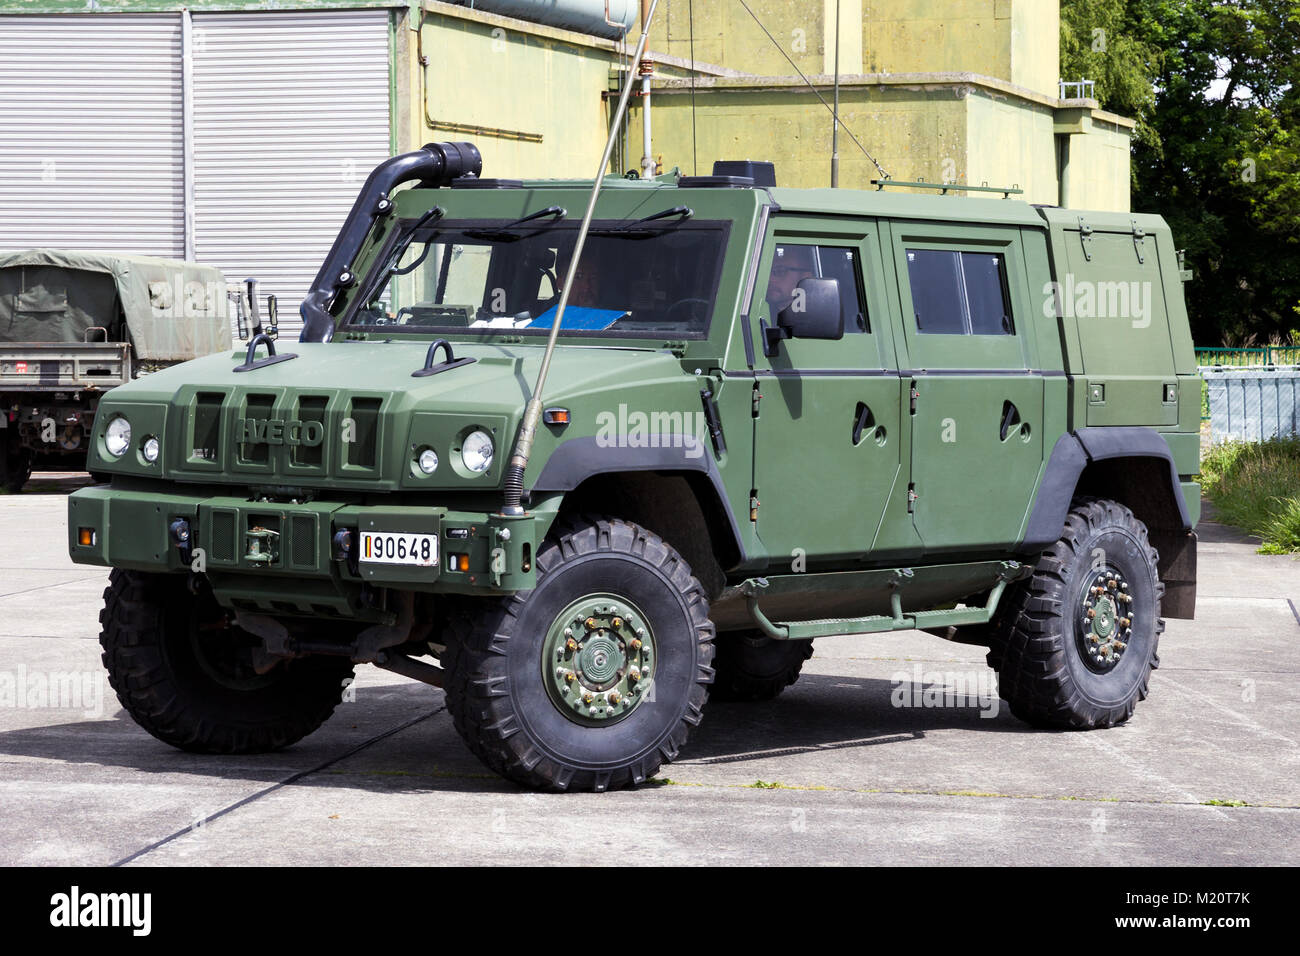 BEAUVECHAIN, Belgien - 20. MAI 2015: Belgische Armee Iveco LMV (Light Multirole Vehicle) auf der Hut. Stockfoto